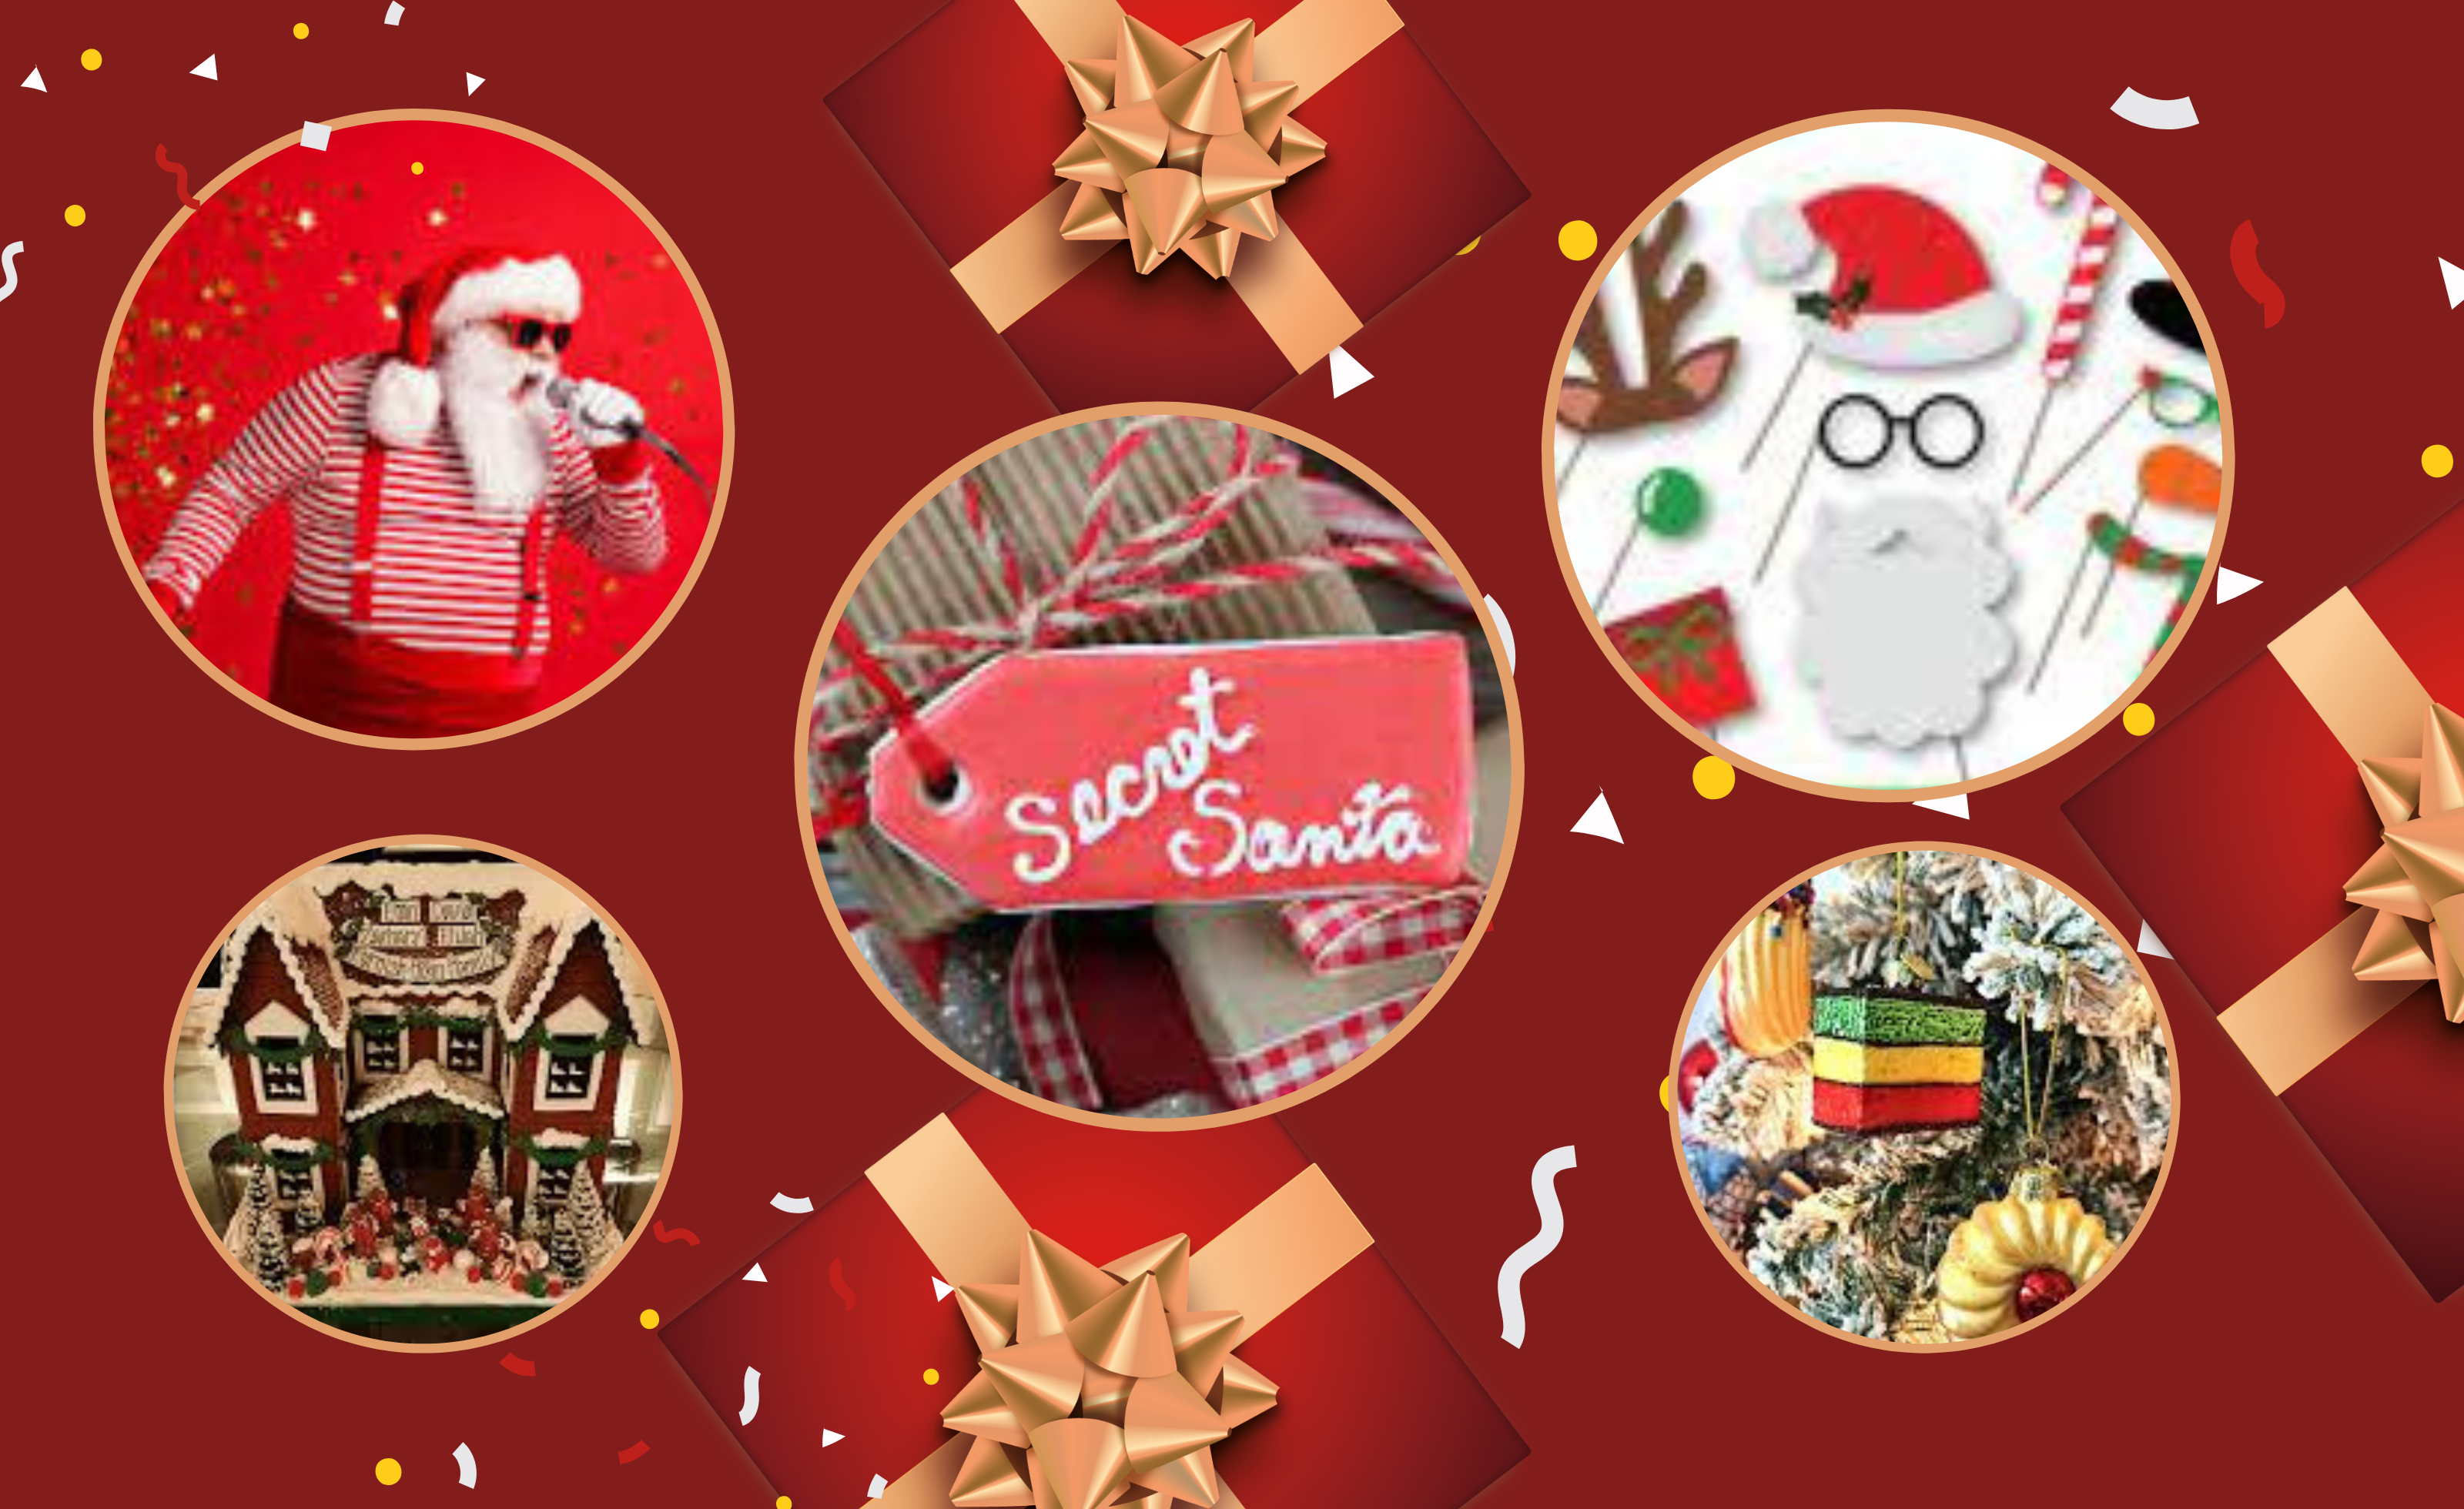 Jingle bell fun: 10 festive Christmas activities to spark joy